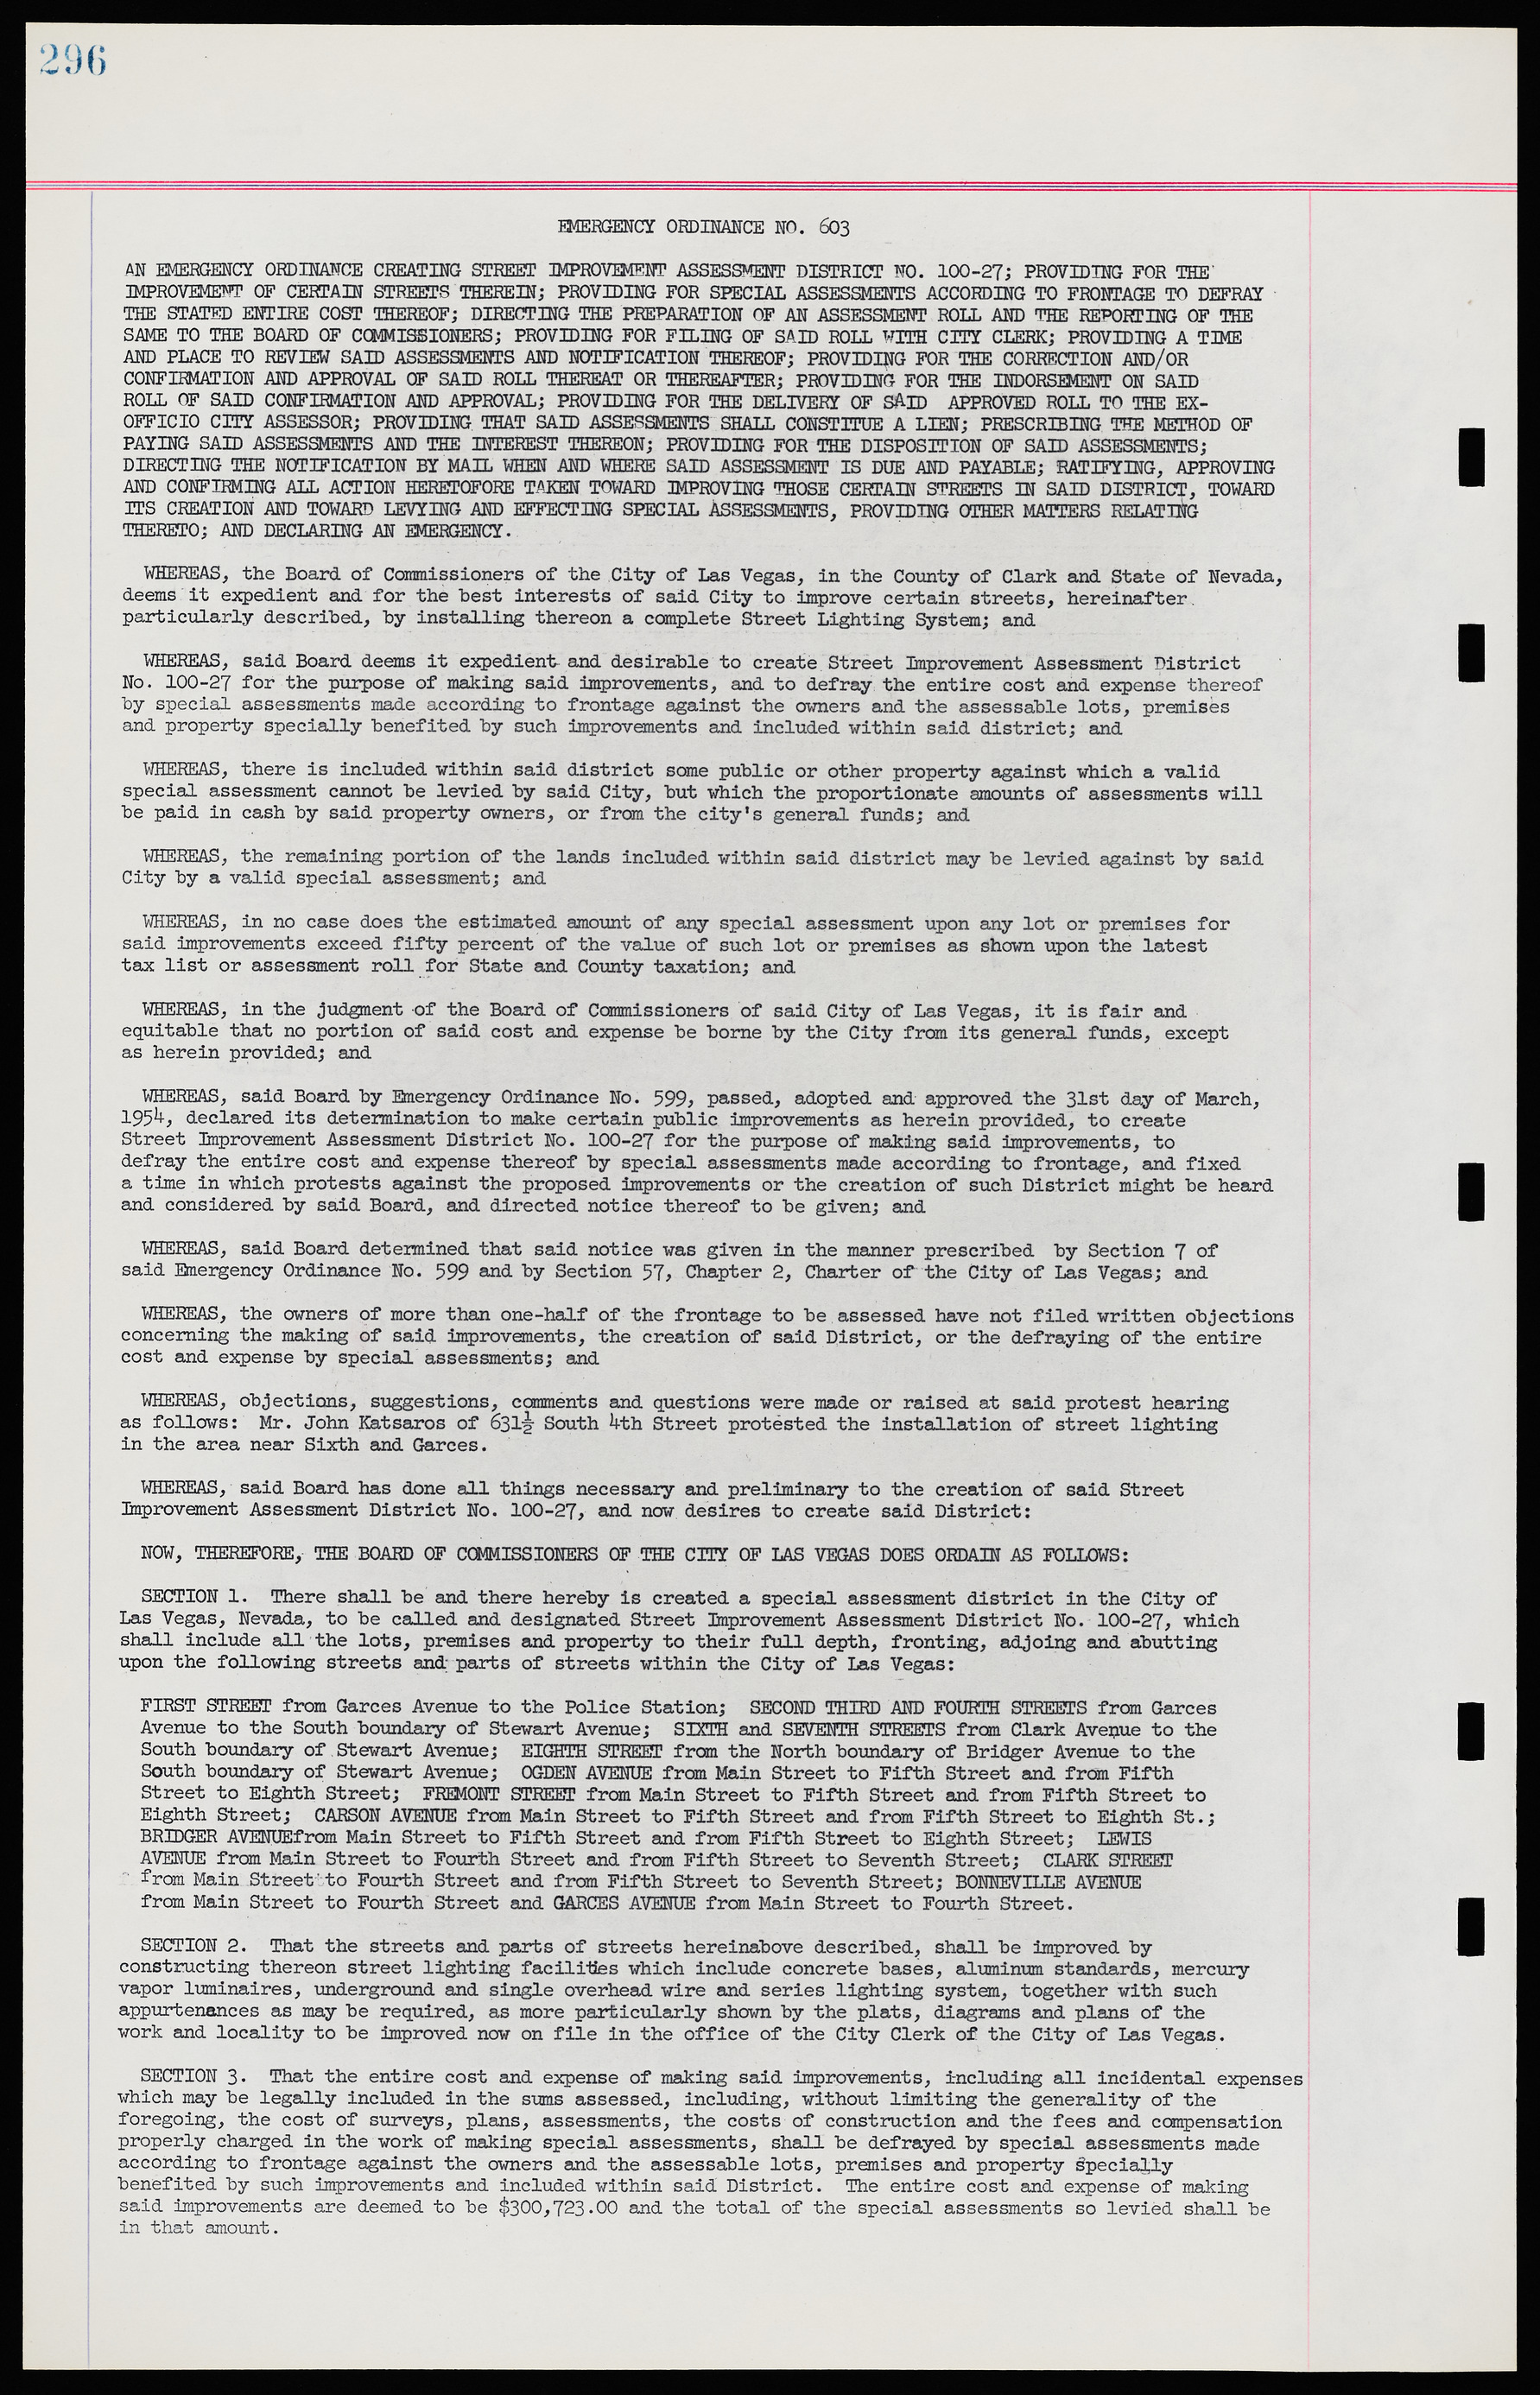 Las Vegas City Ordinances, November 13, 1950 to August 6, 1958, lvc000015-304